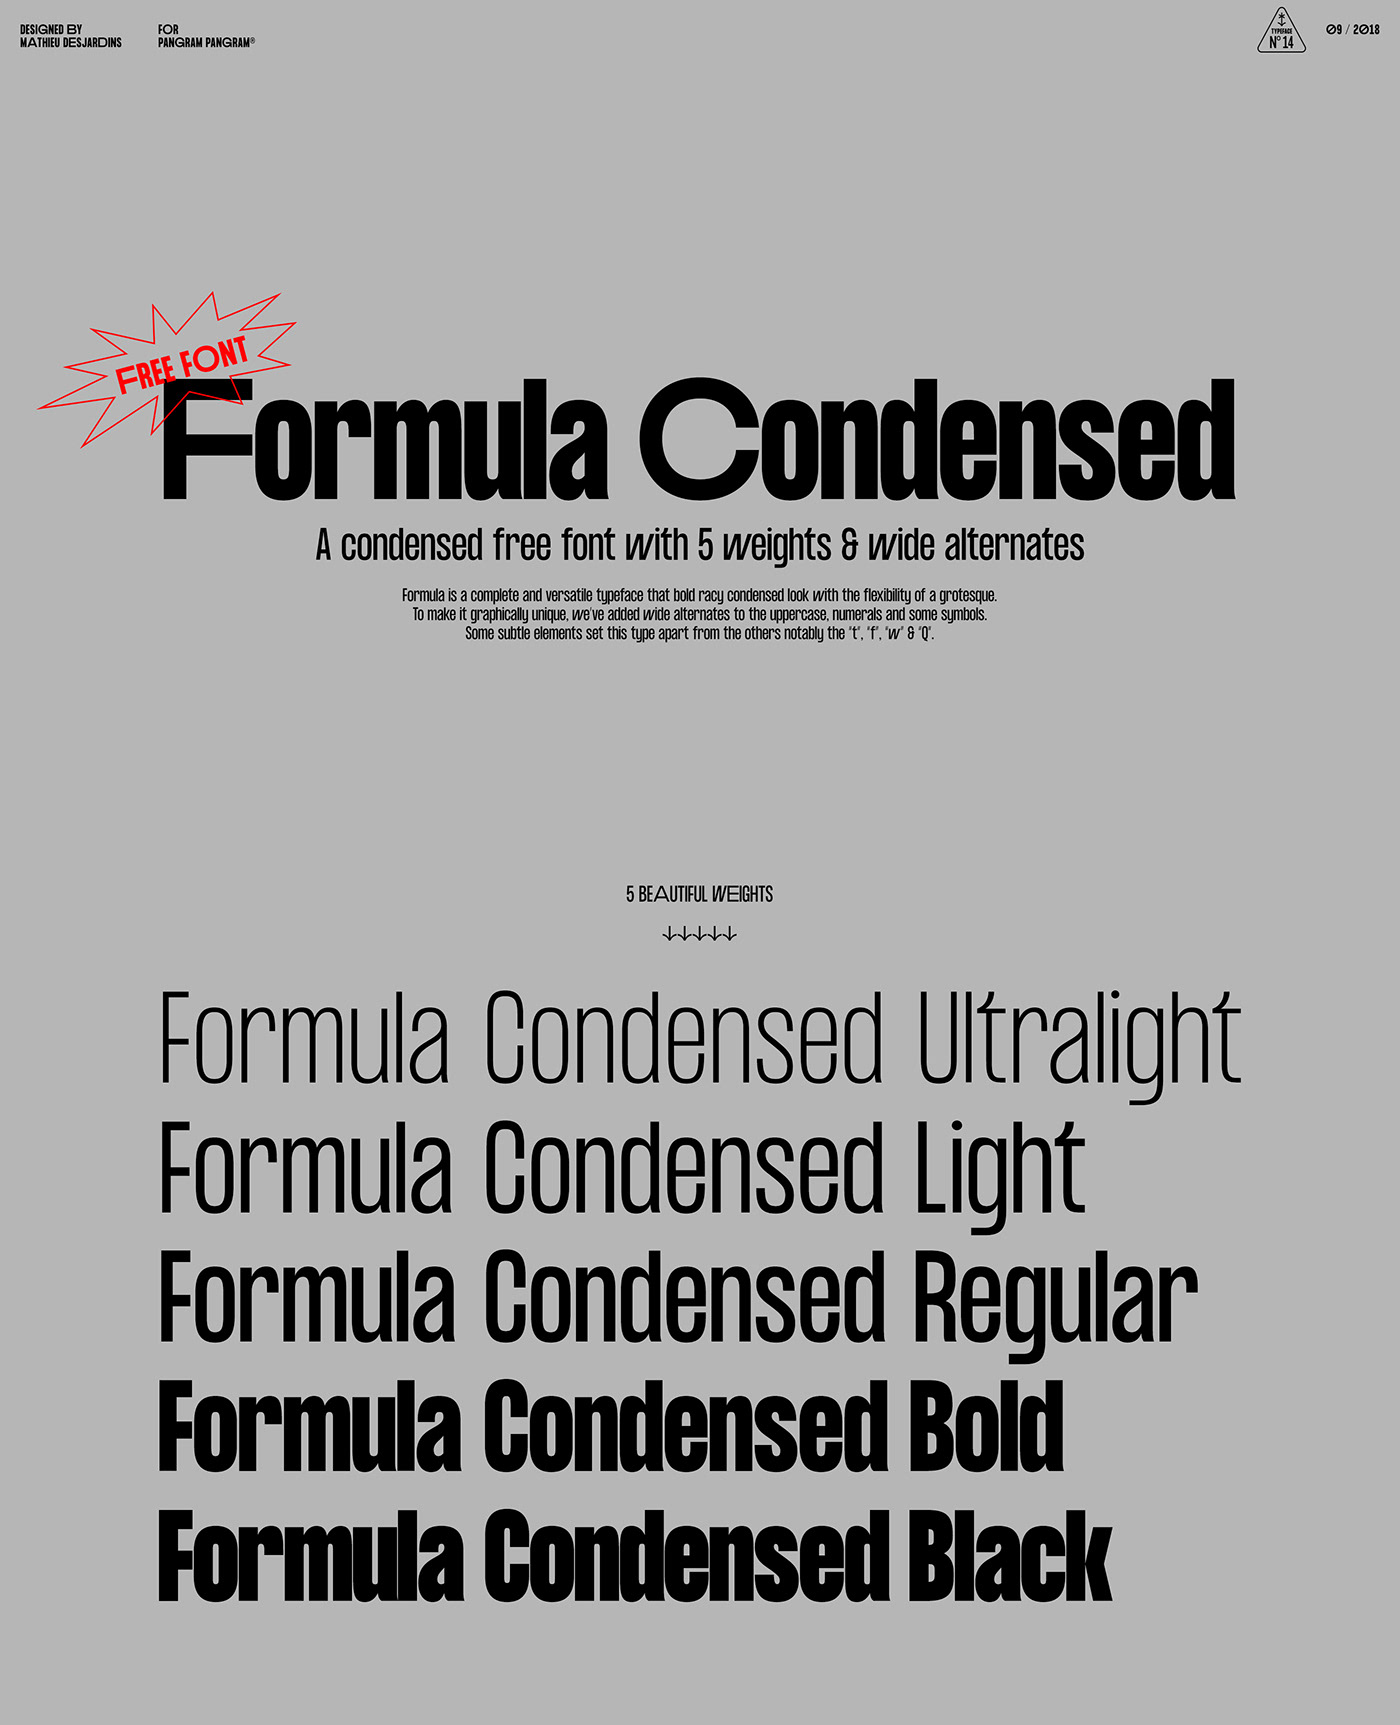 Formula Consensed Typeface Fontlot Com